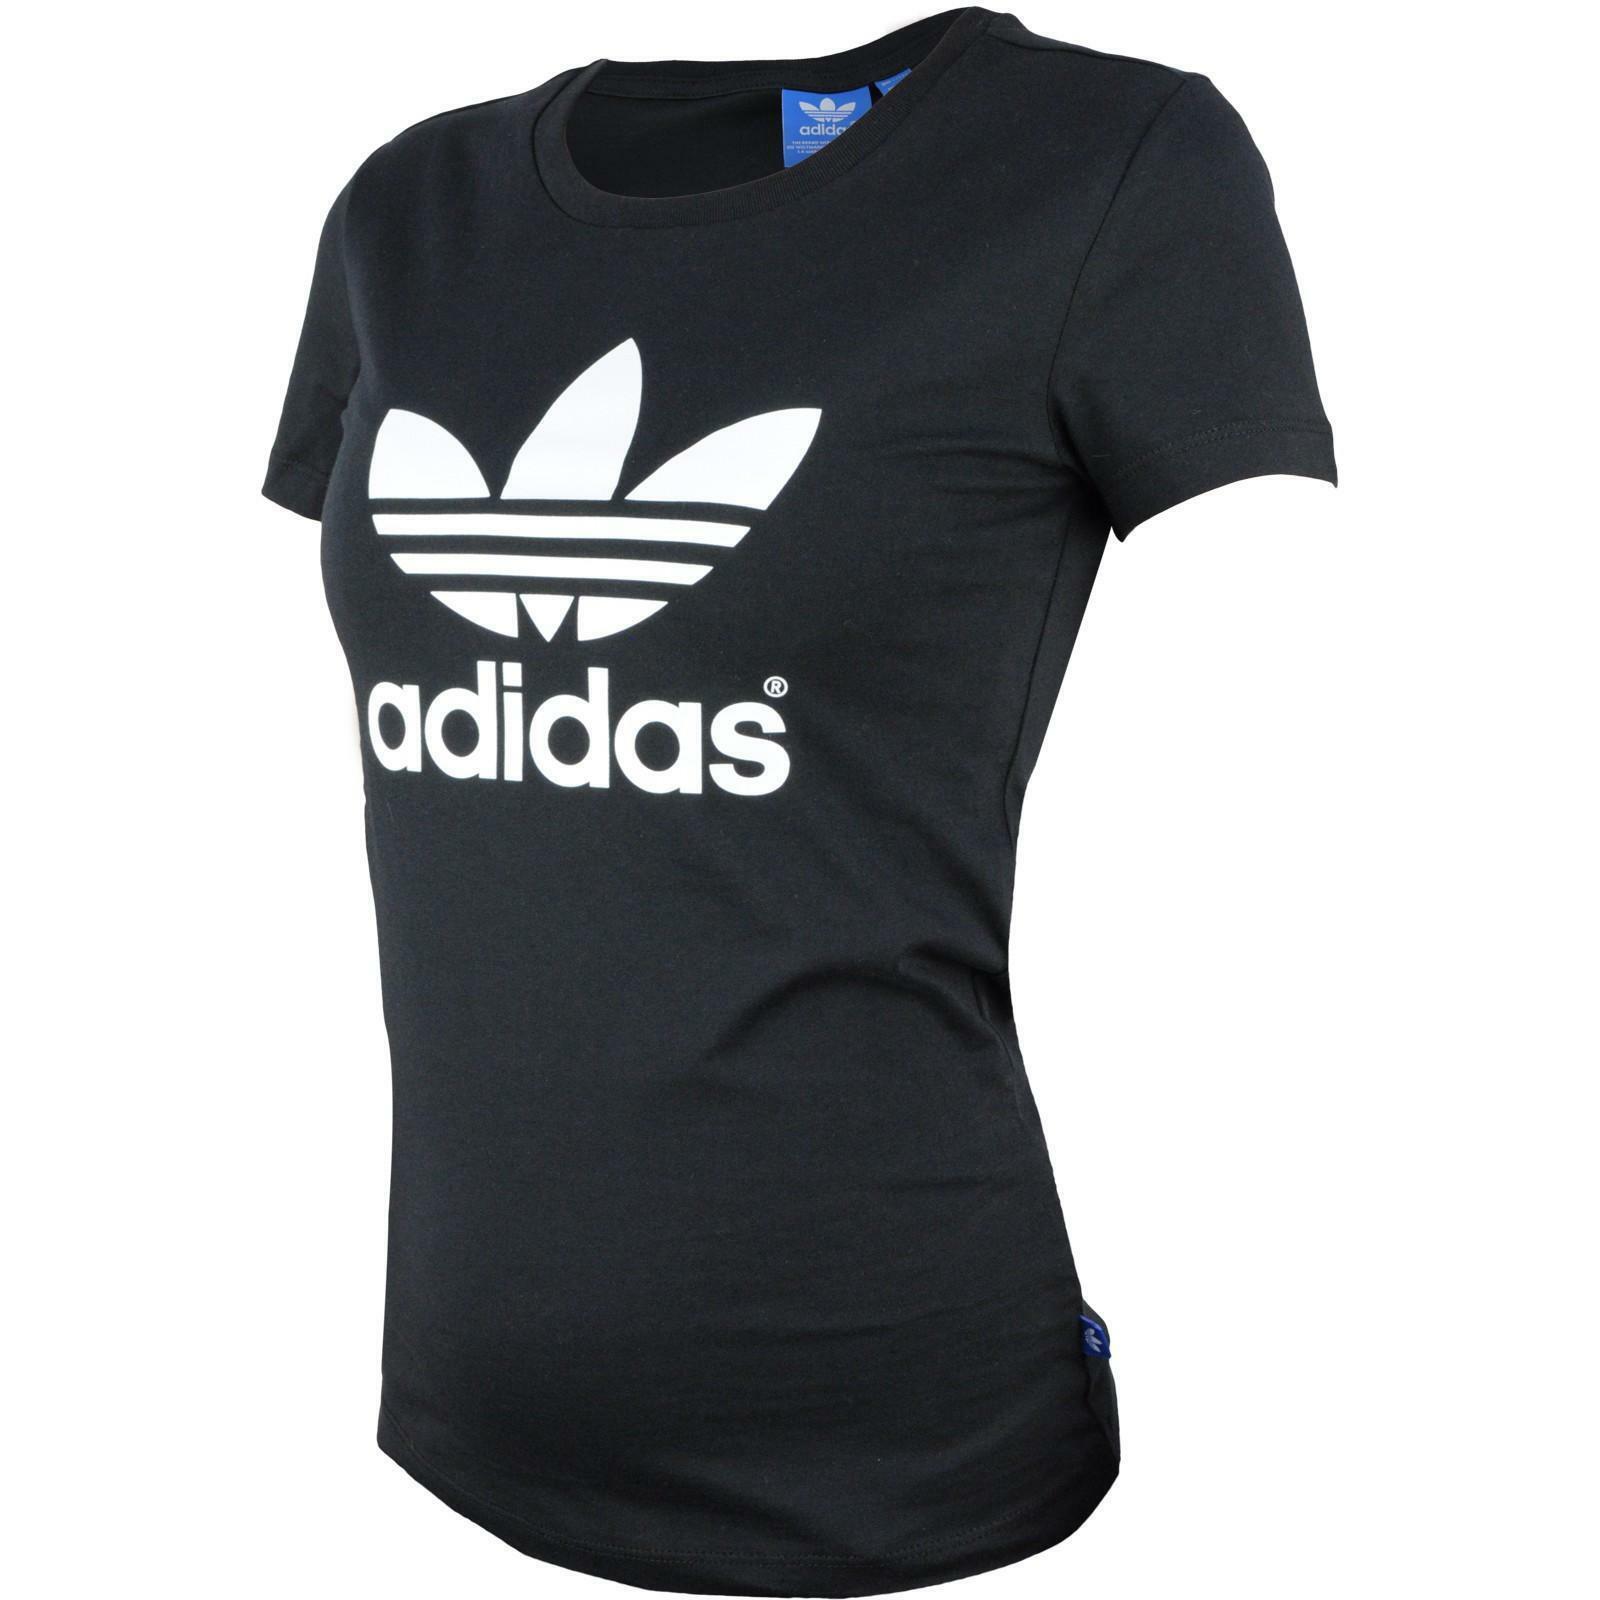 adidas adidas trefoil t-shirt donna nera 100% cotone aj8084